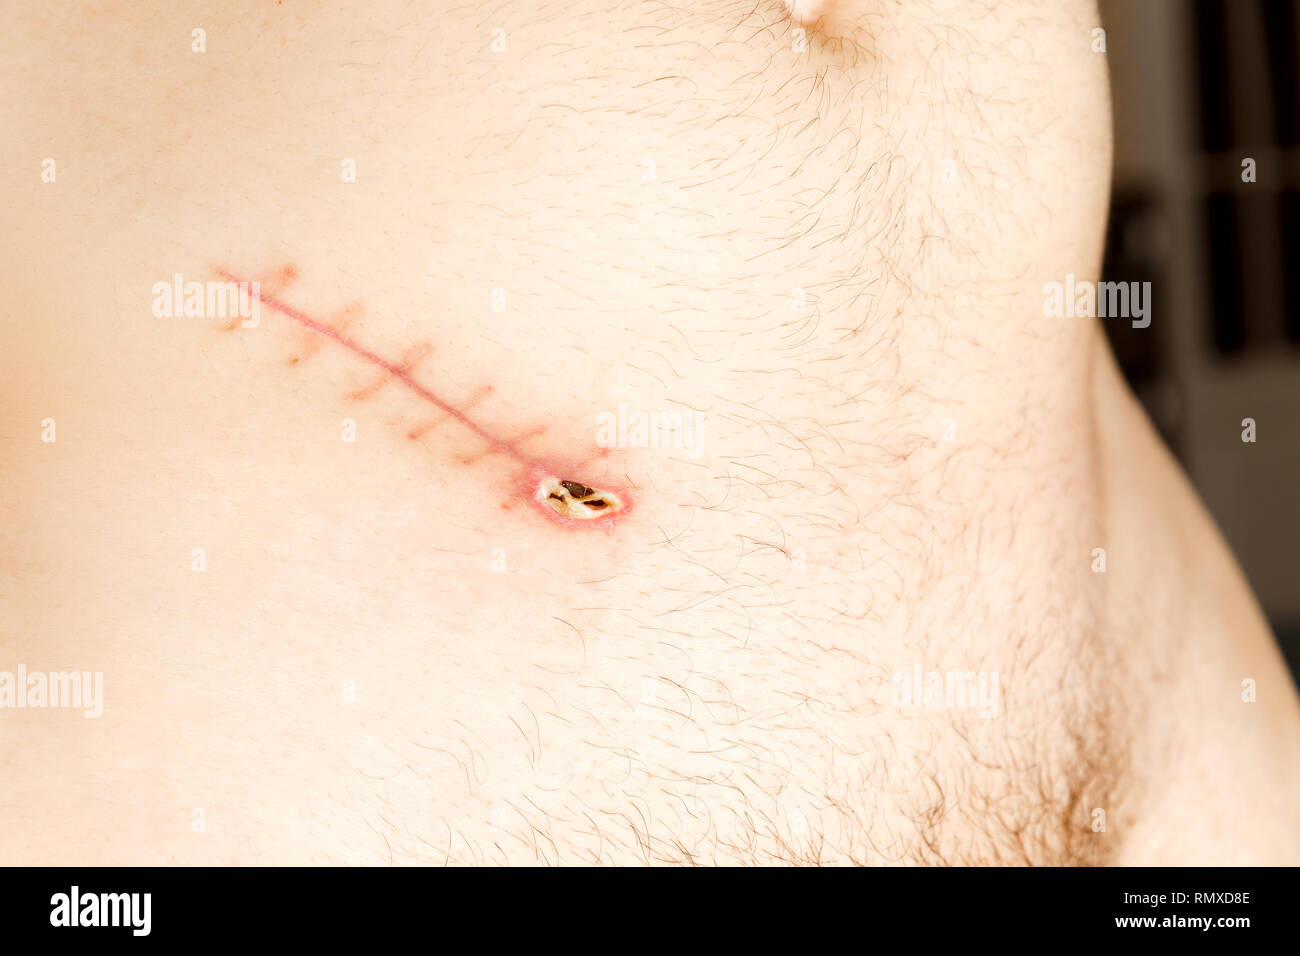 normal appendicitis scar